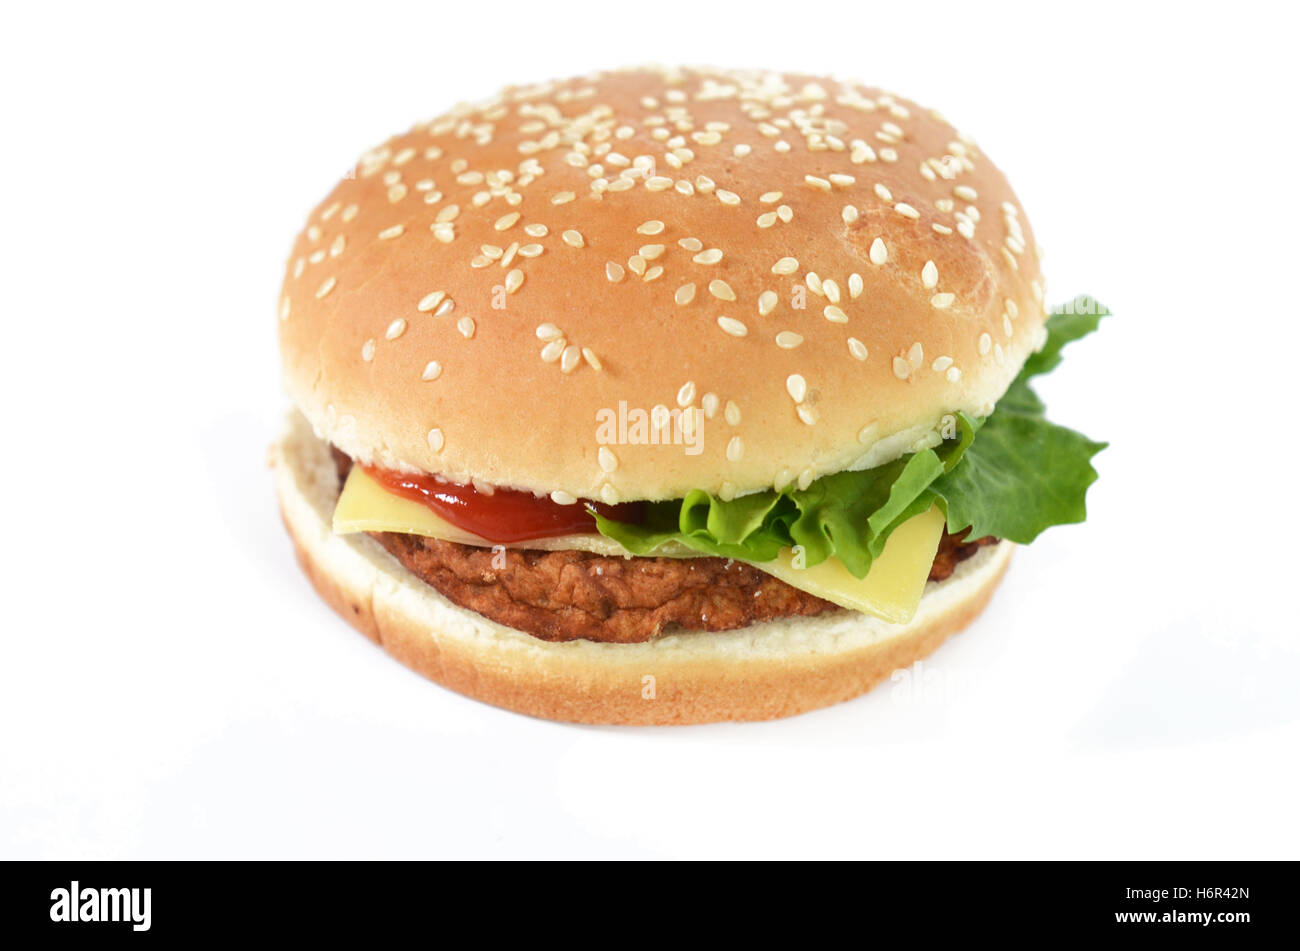 Formaggio un fast food roll kaiser hamburger burger cittadino burgher cheeseburger ketchup insalata aliment cibo insalubrious isolato Foto Stock